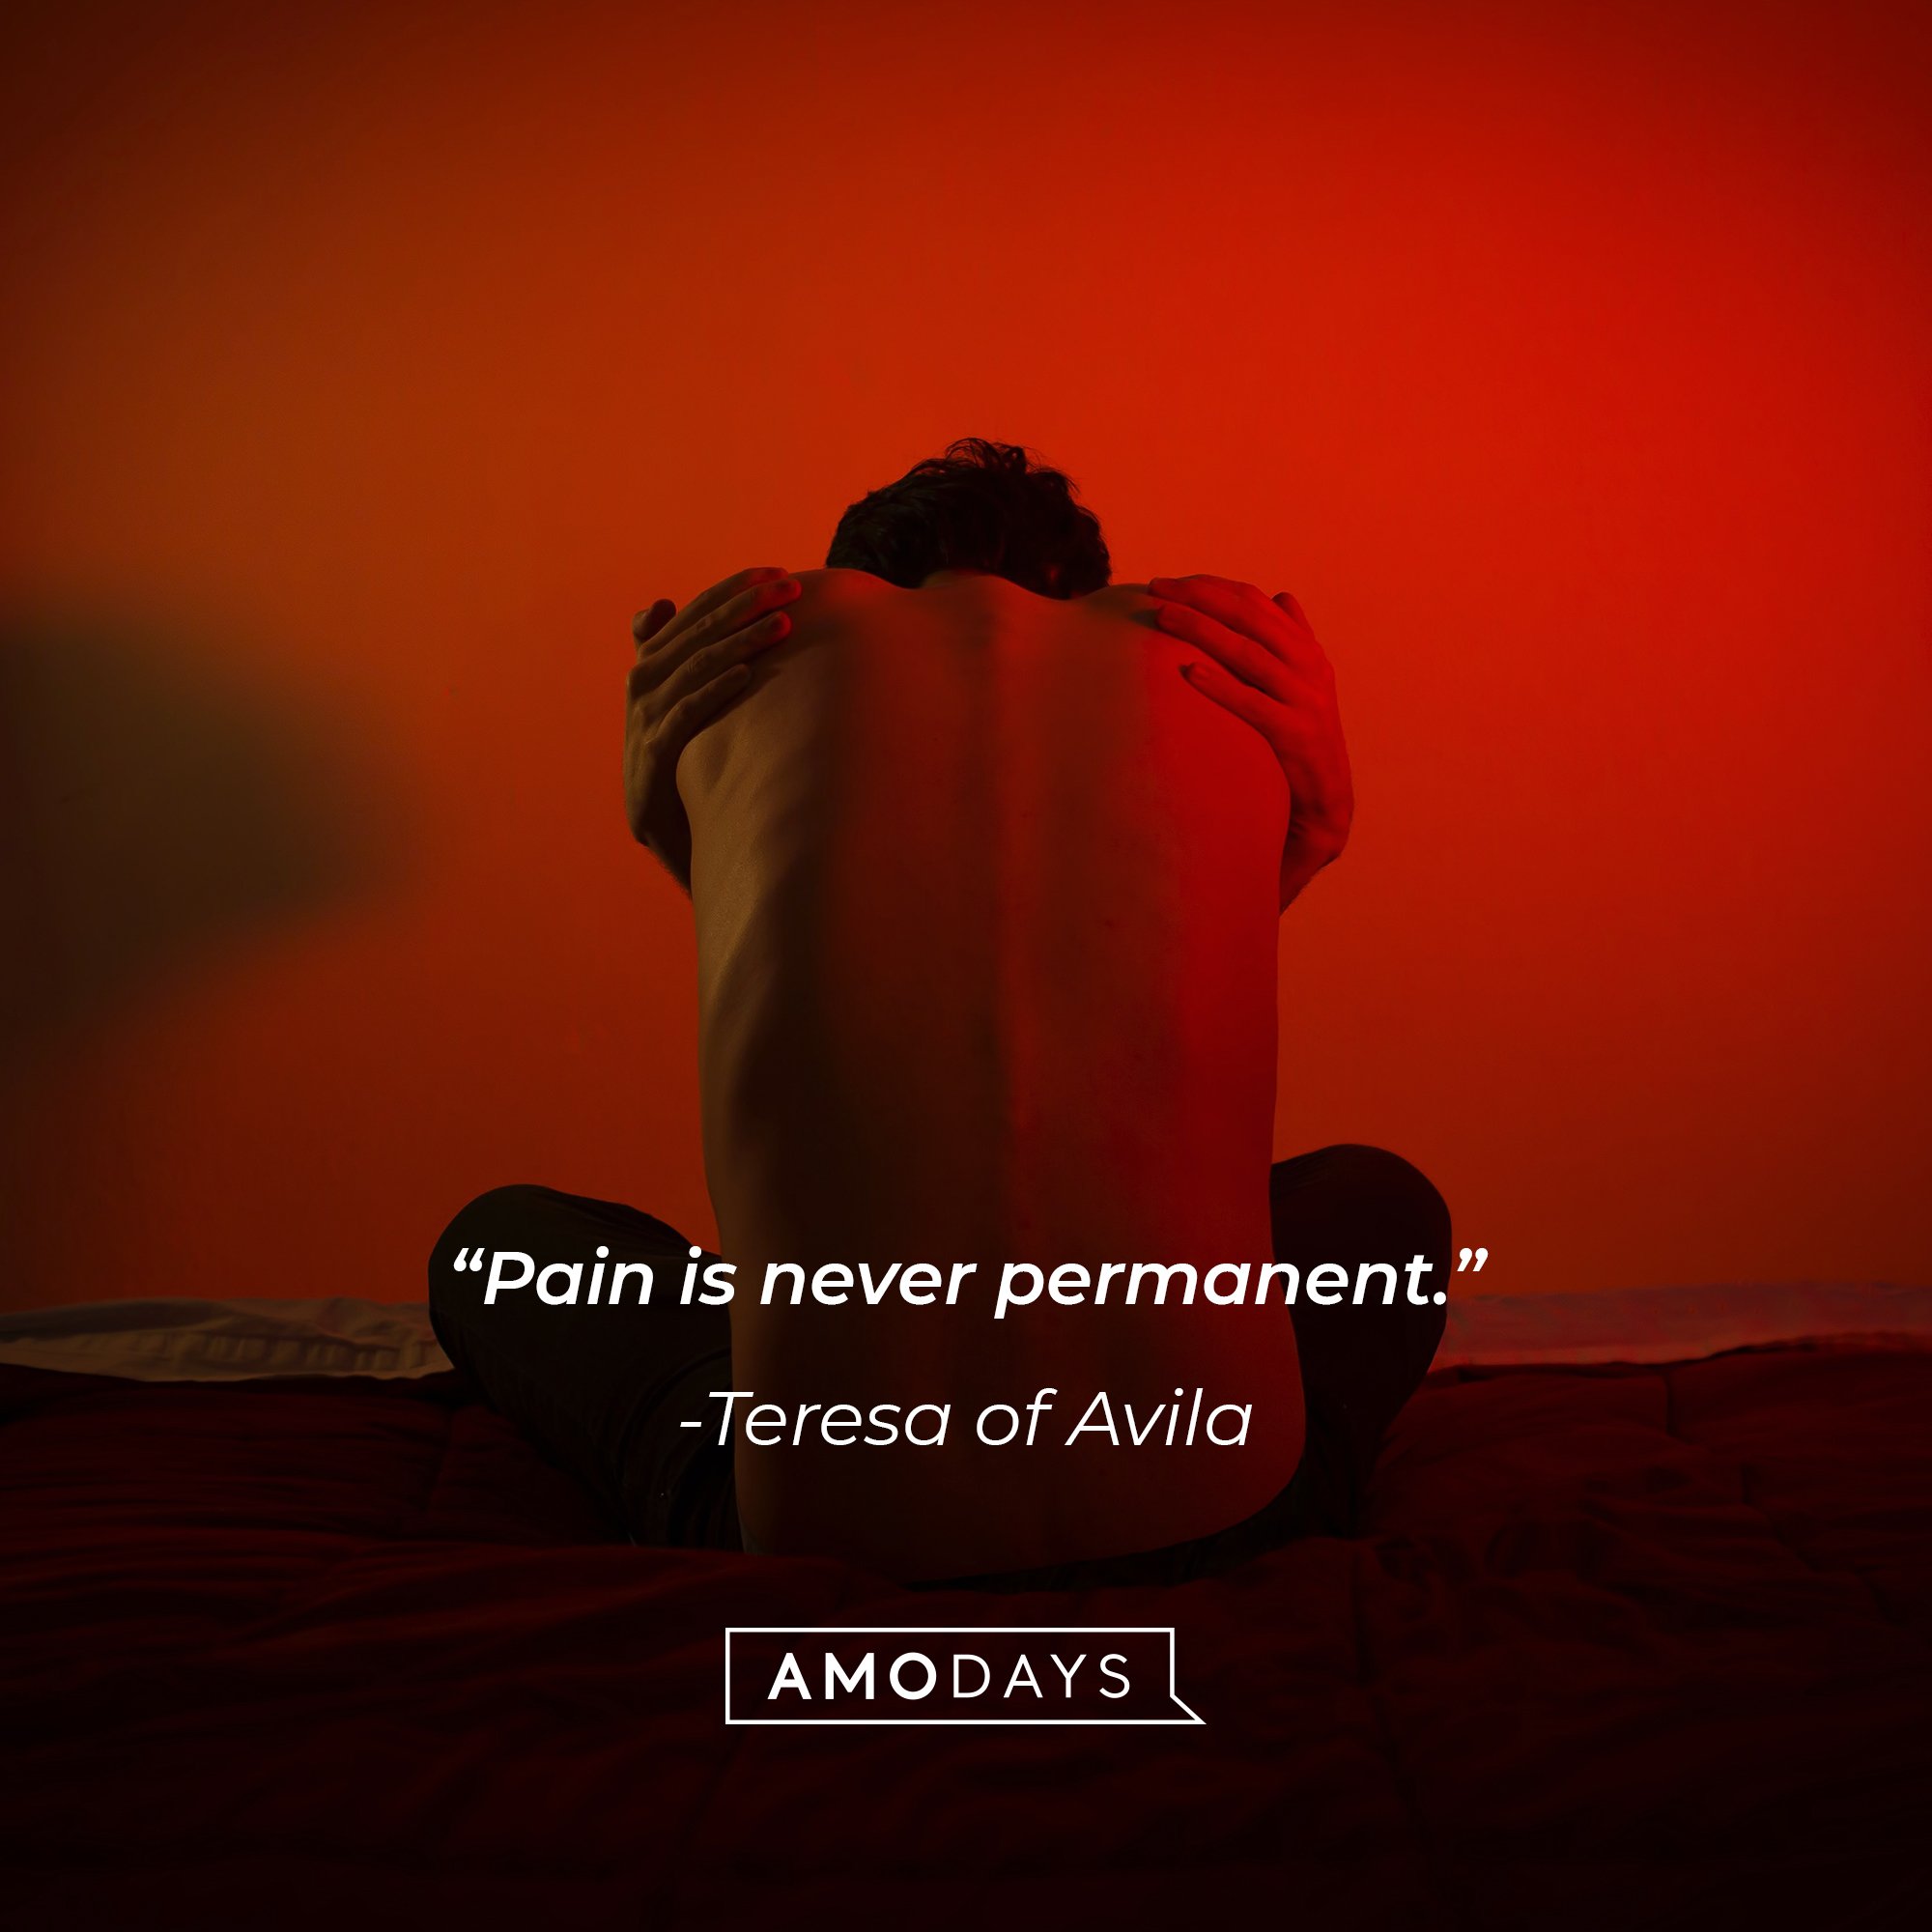 Teresa of Avila's quote: "Pain is never permanent." | Image: AmoDays